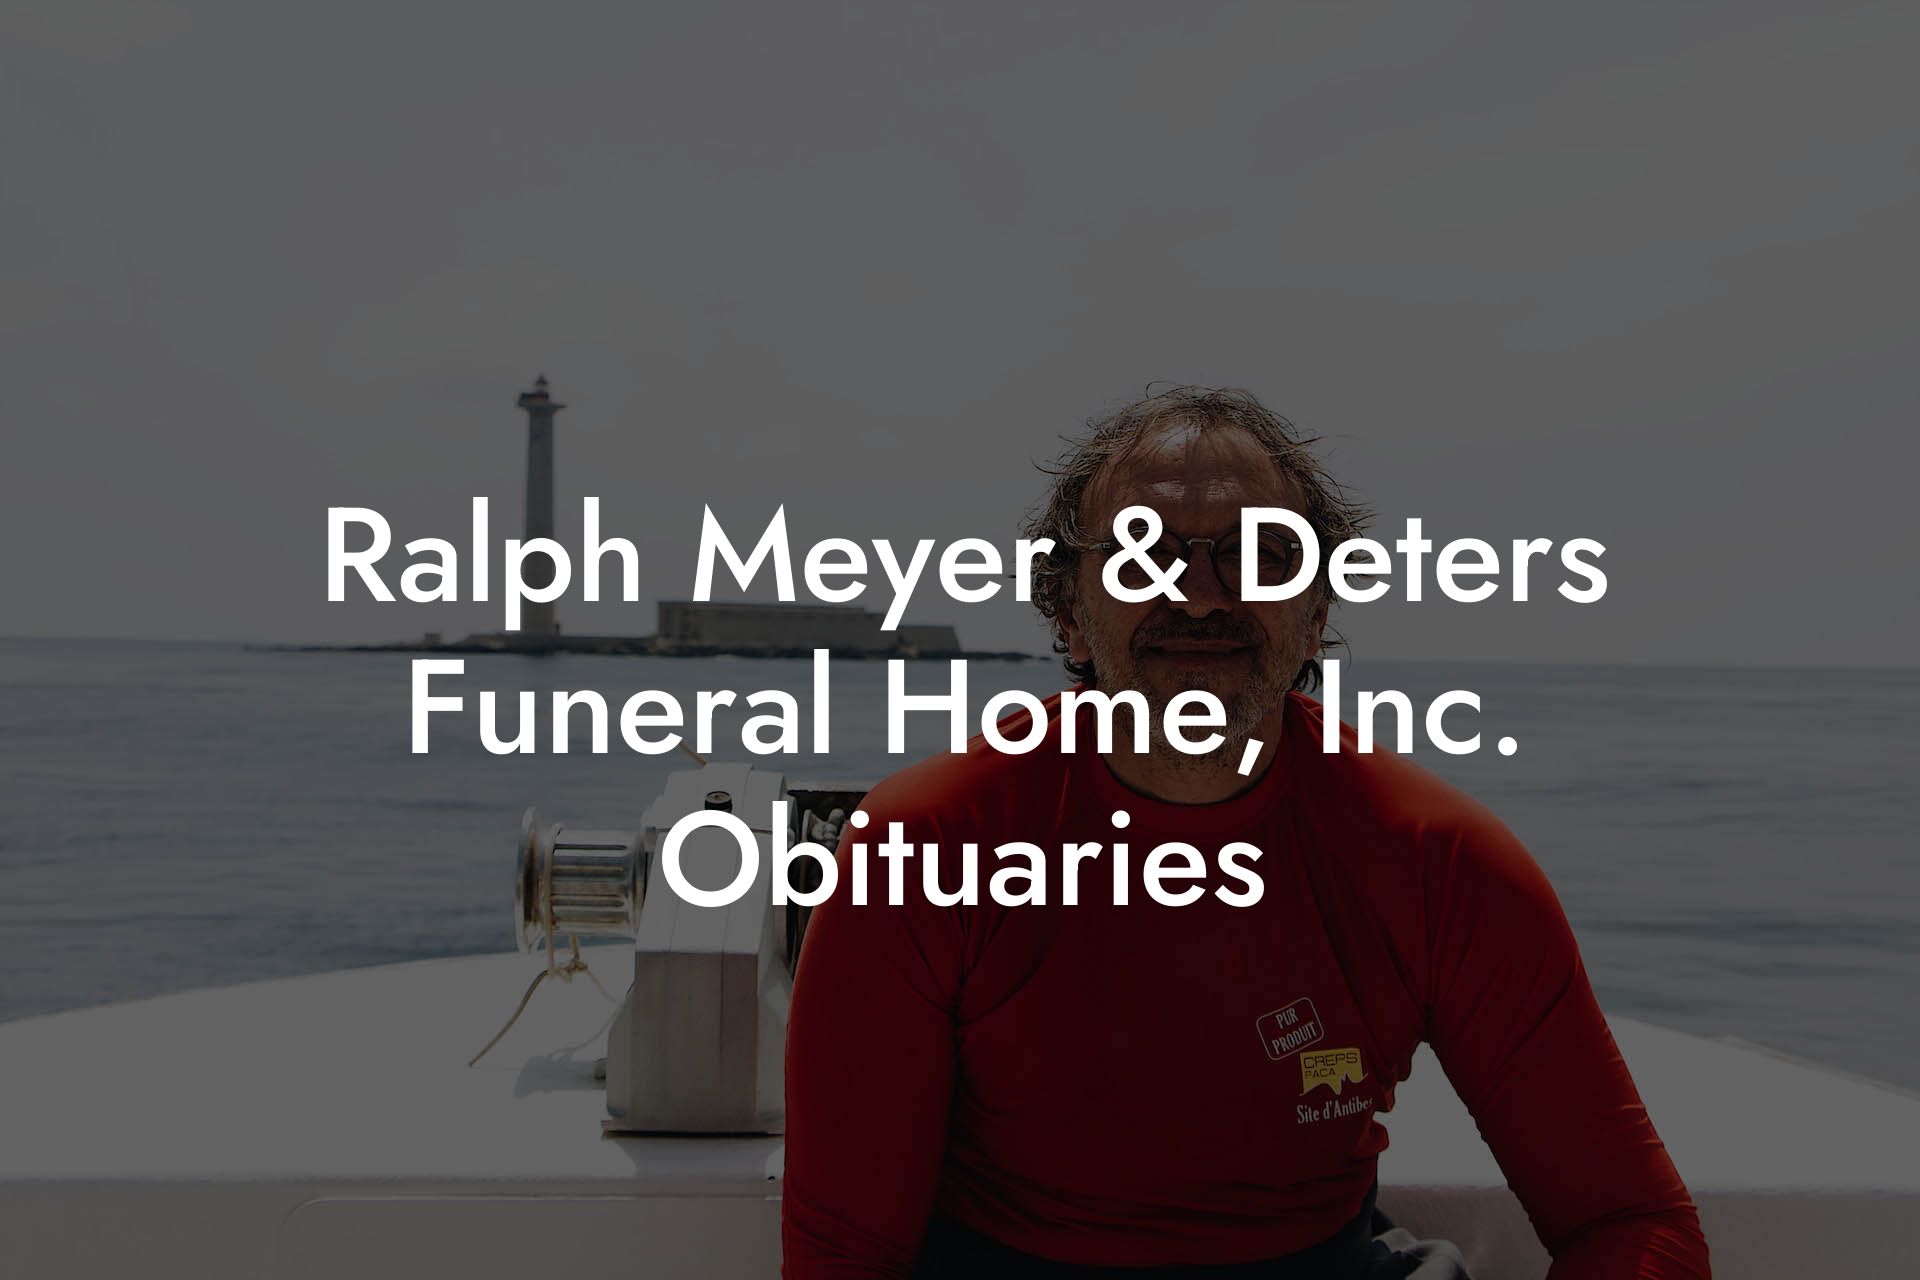 Ralph Meyer & Deters Funeral Home, Inc. Obituaries